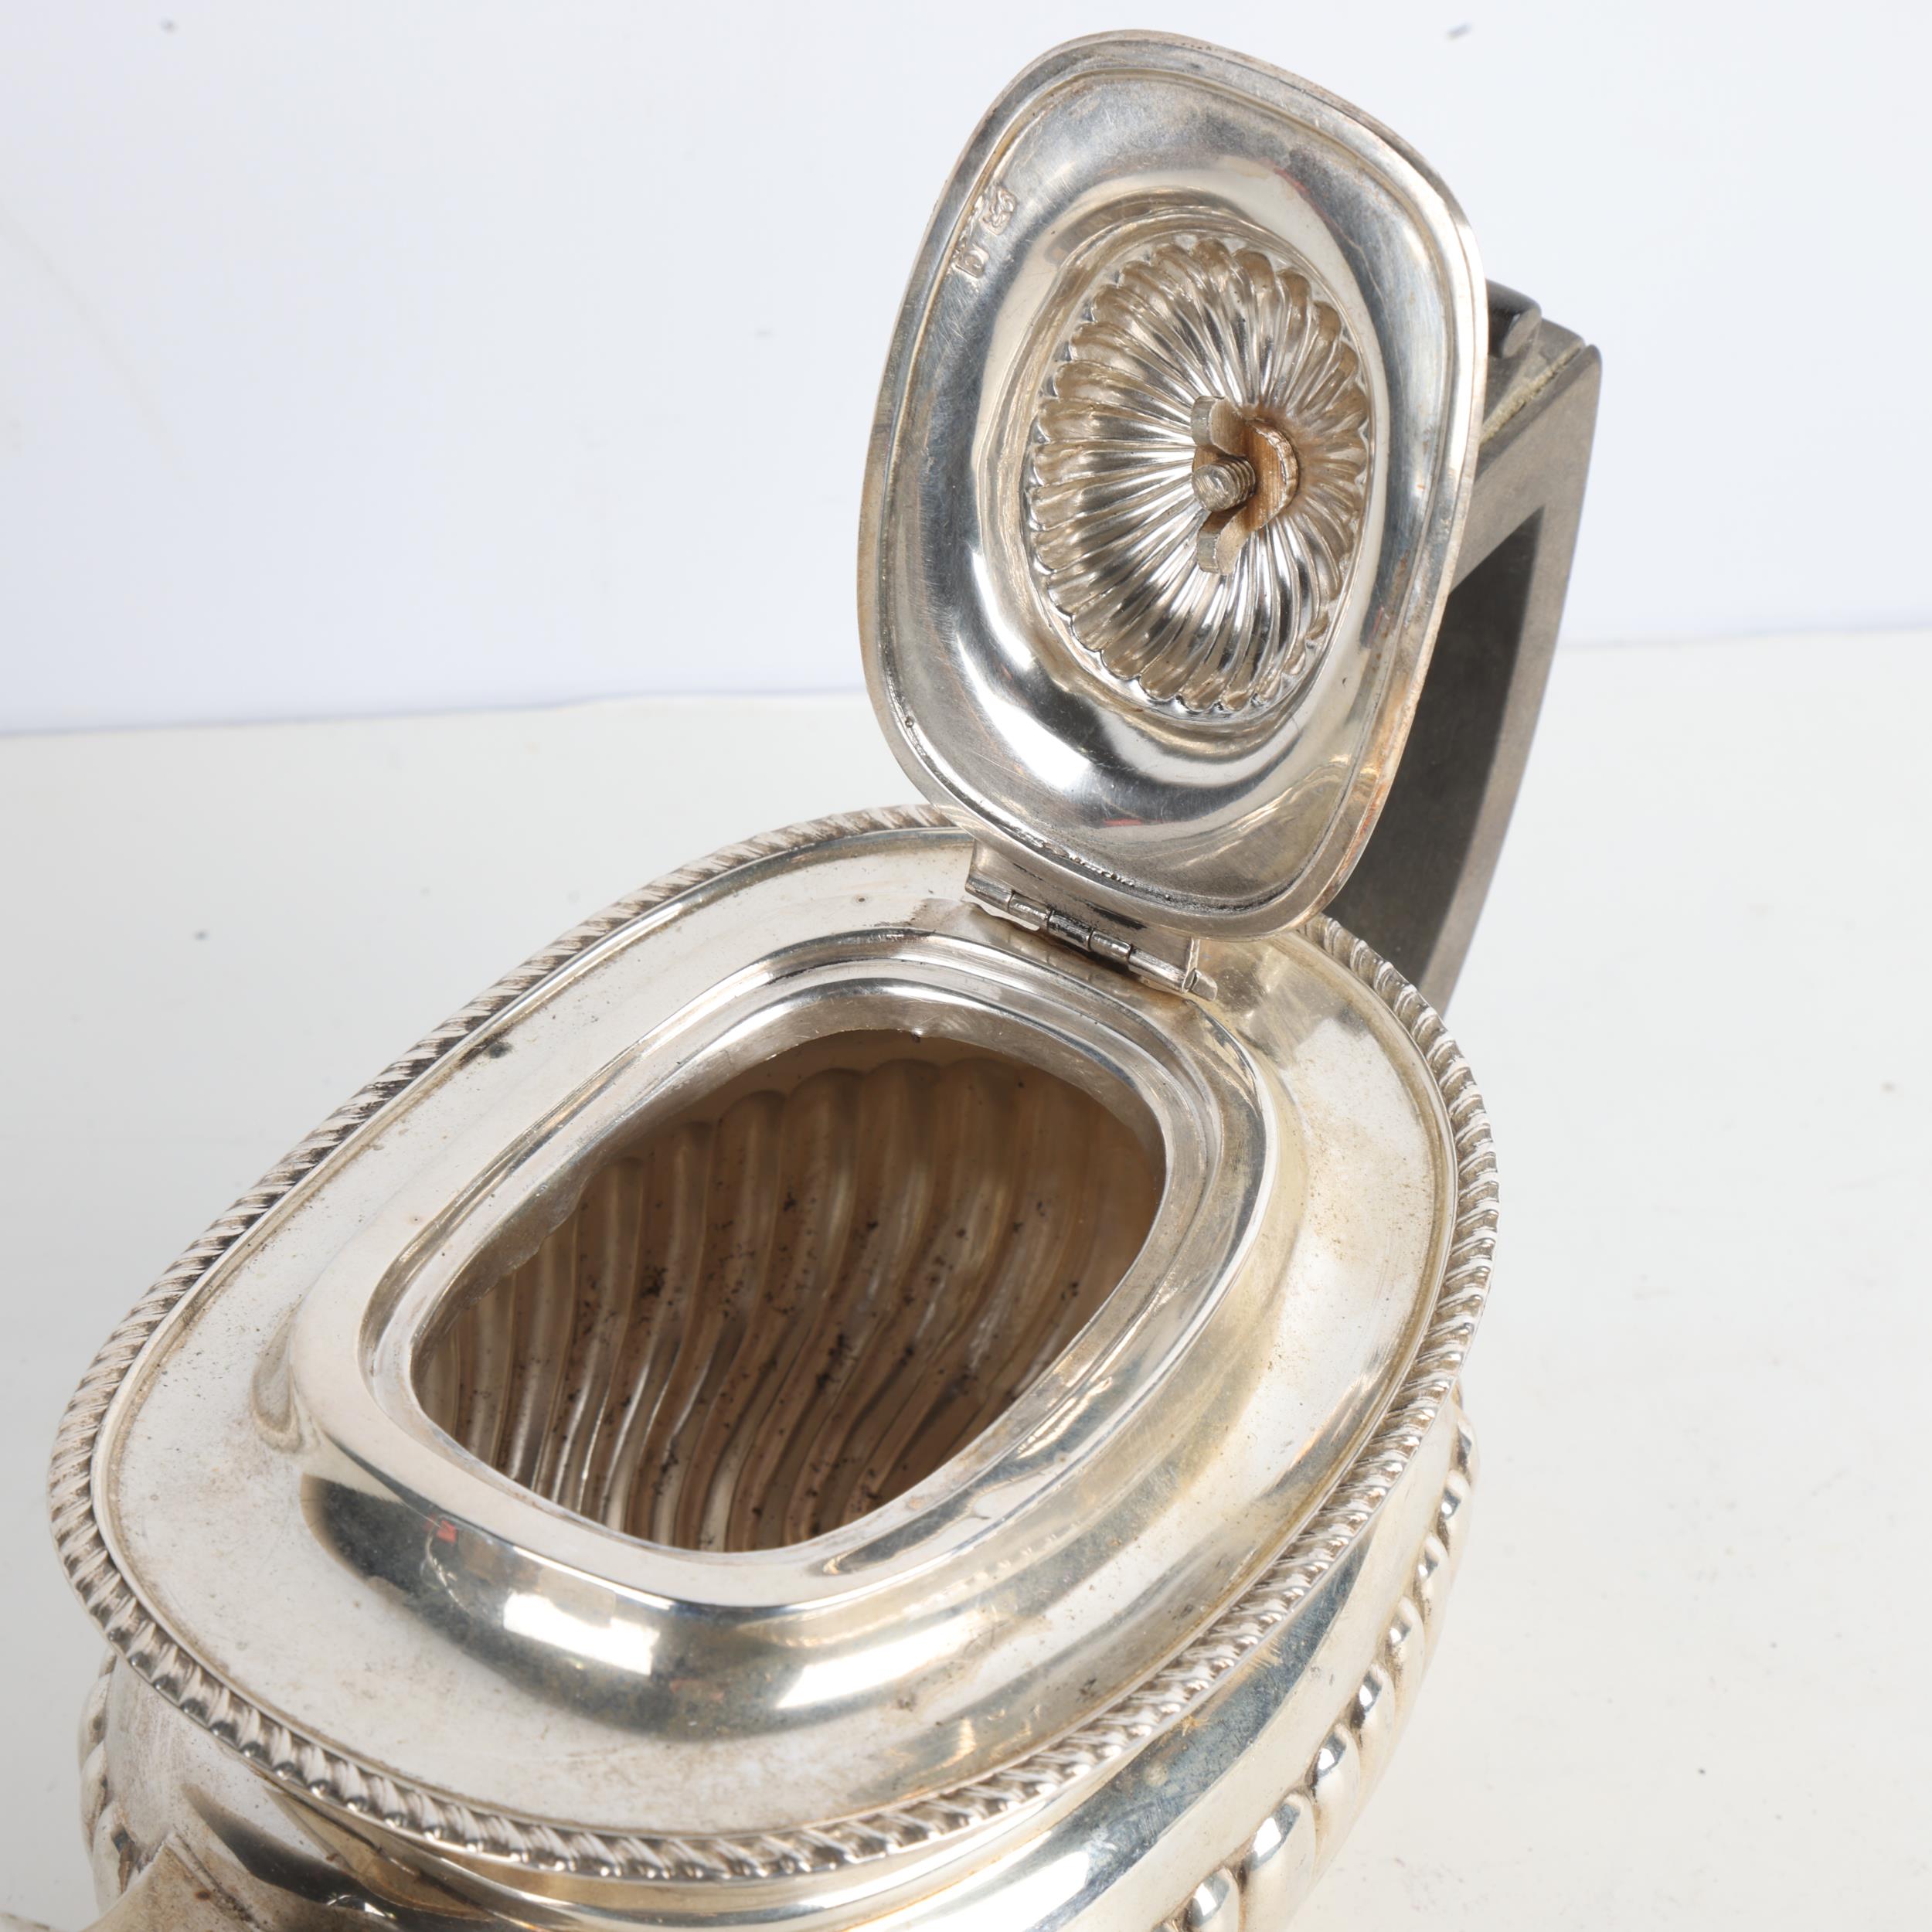 An Edwardian silver bachelor's teapot, William Aitken, Birmingham 1902, oval bulbous form with - Image 3 of 3